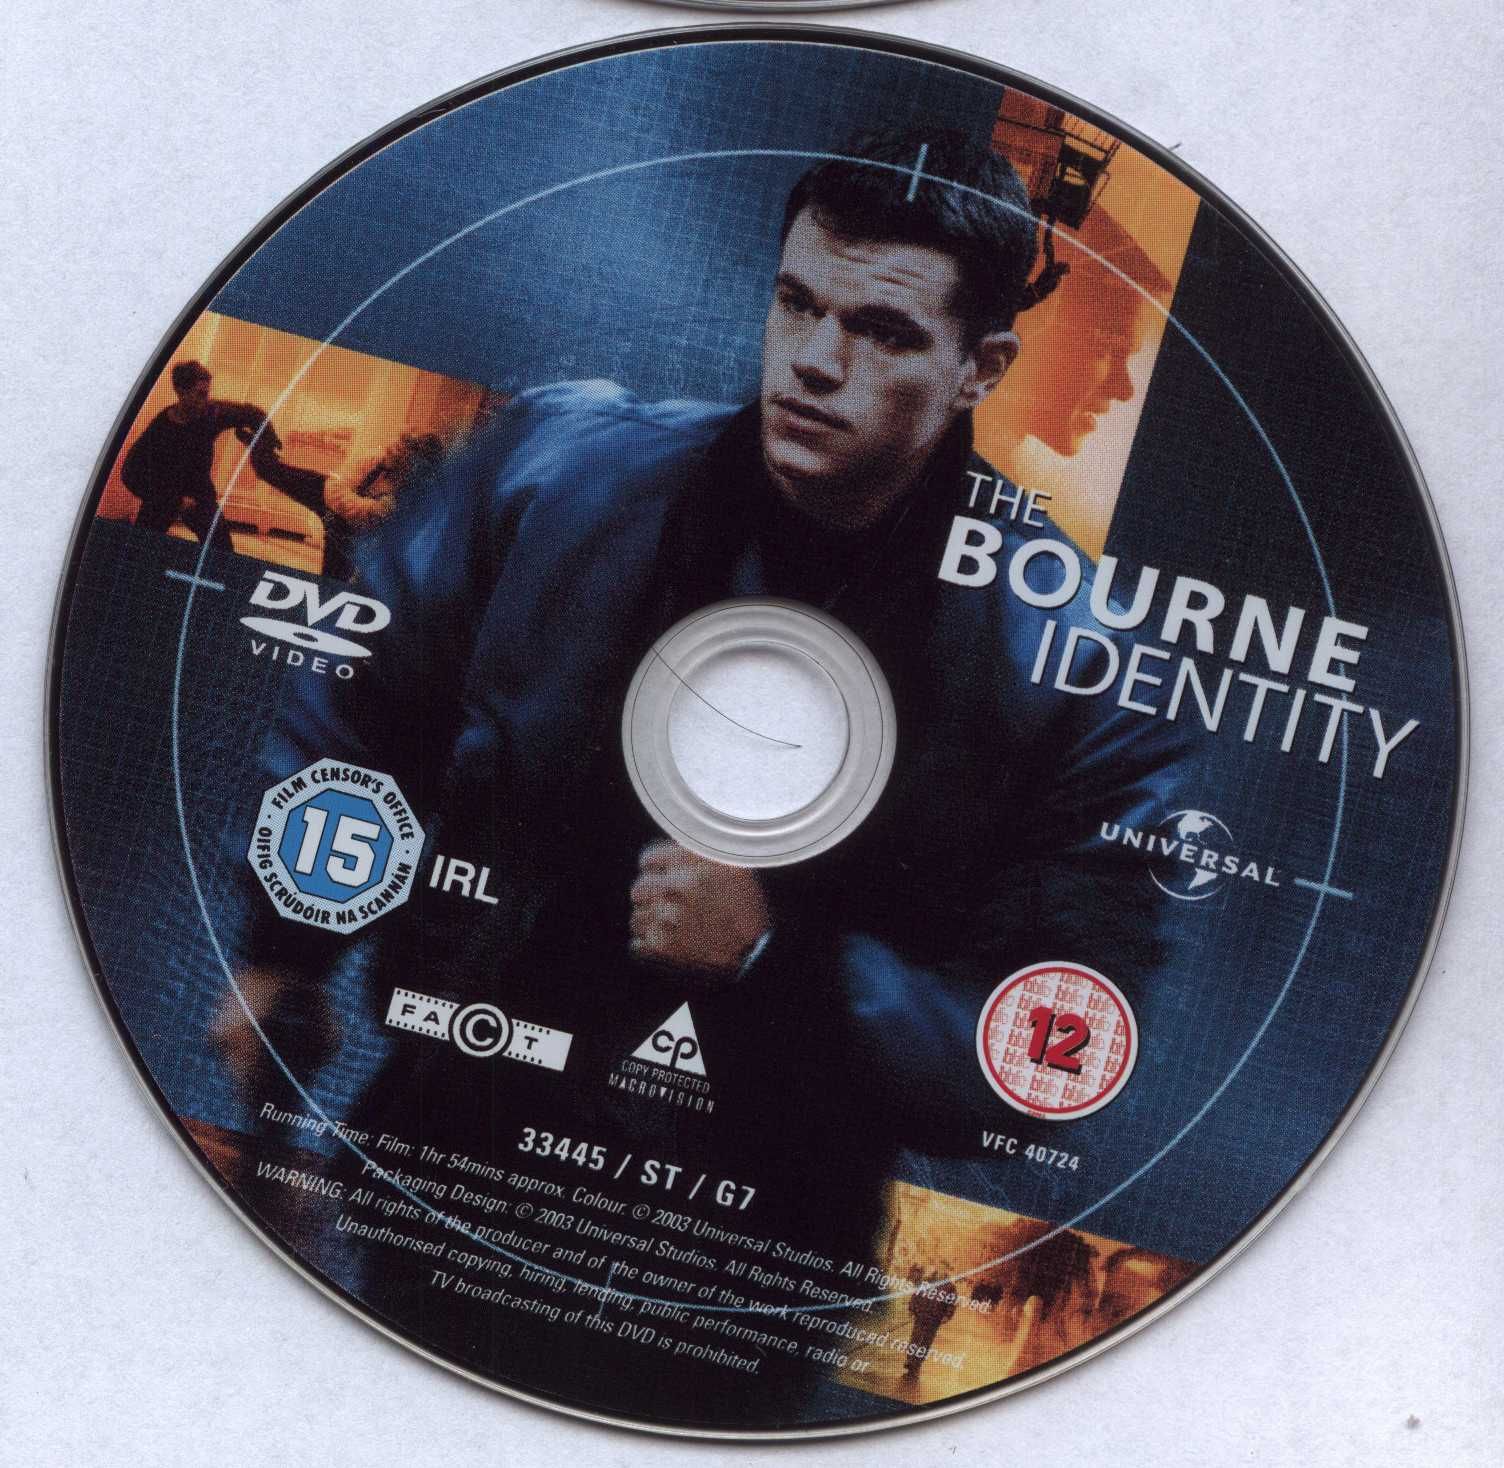 Mission Impossible 2, Bond, i inne DVD wersje oryginalne z napisami